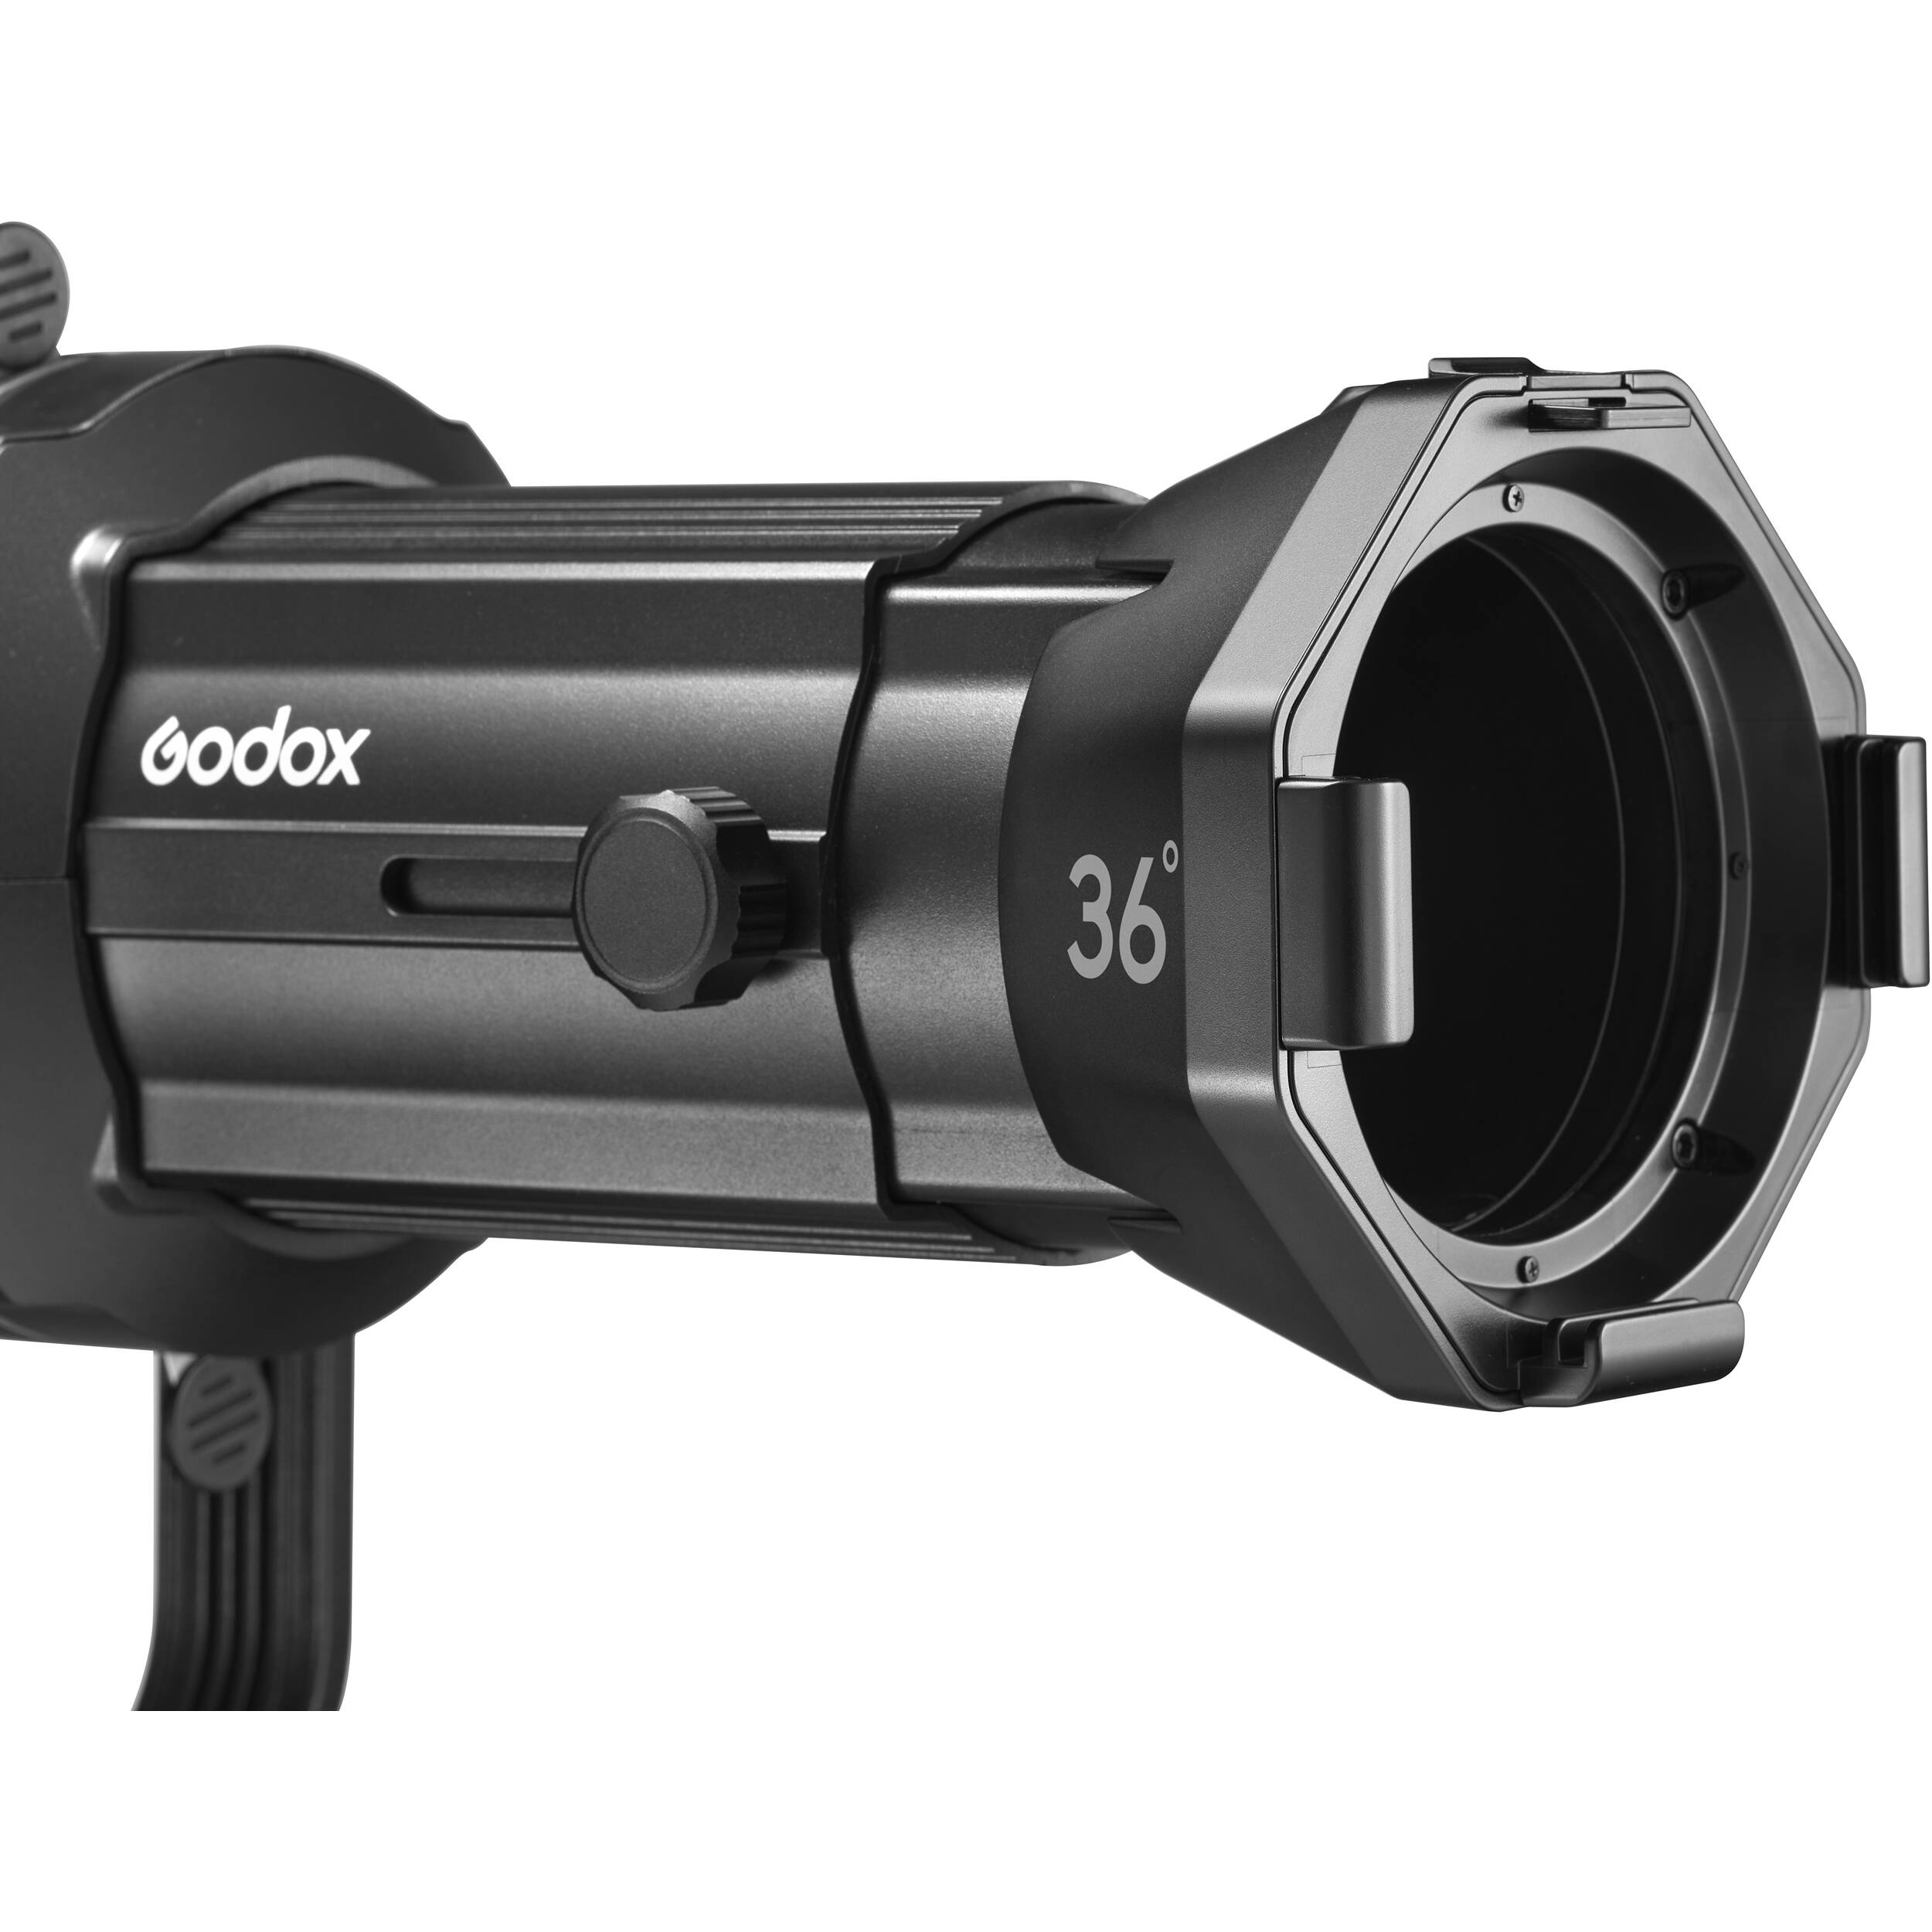    Godox VSA-36K   36   Ultra-mart